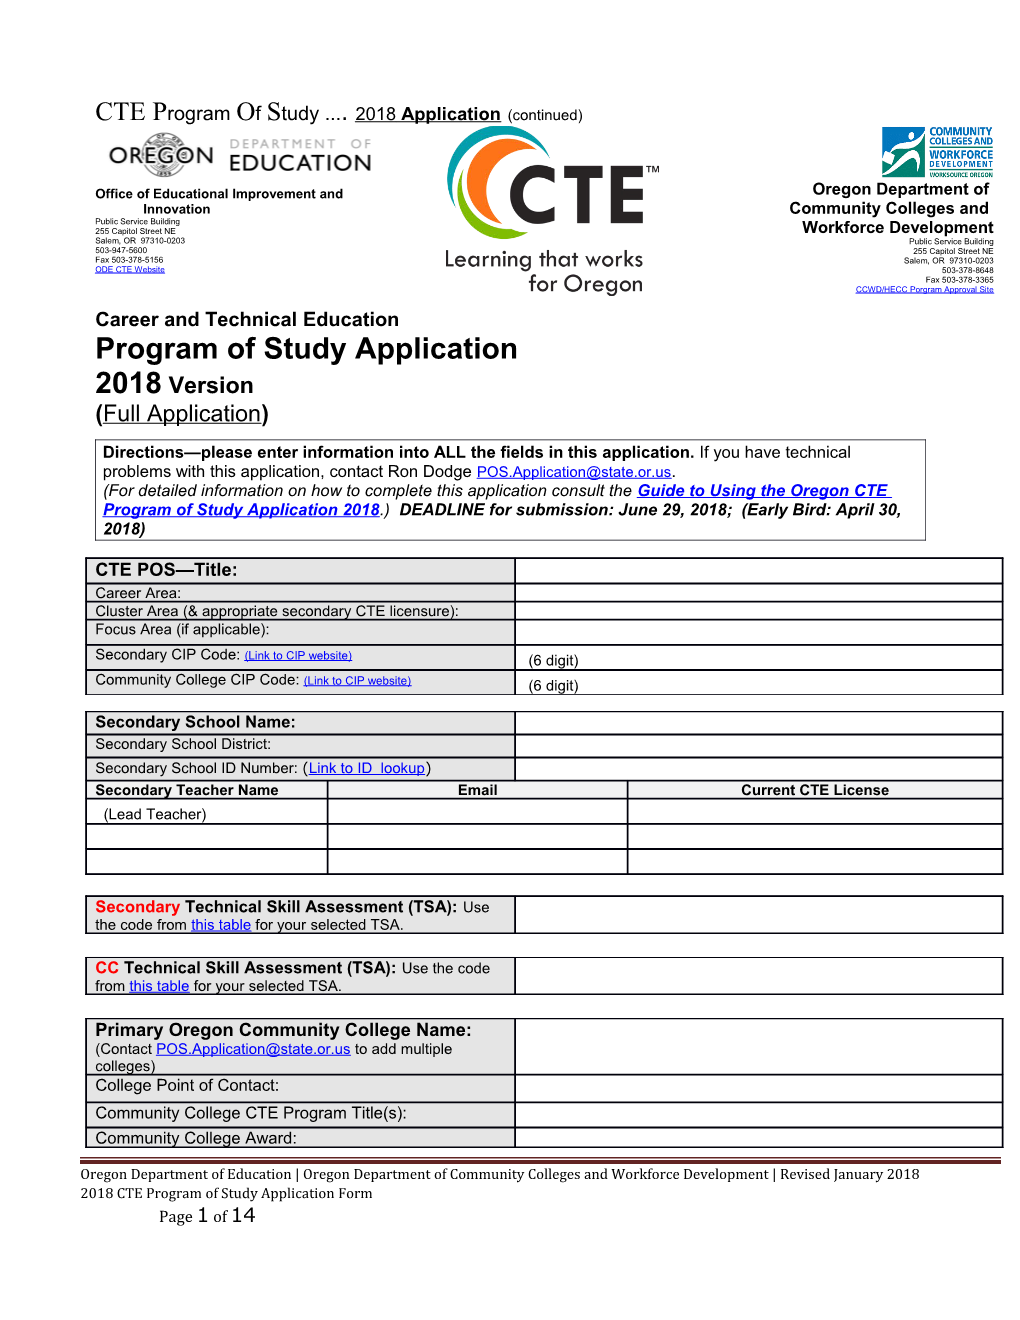 CTE POS: Oregon Program of Study Application